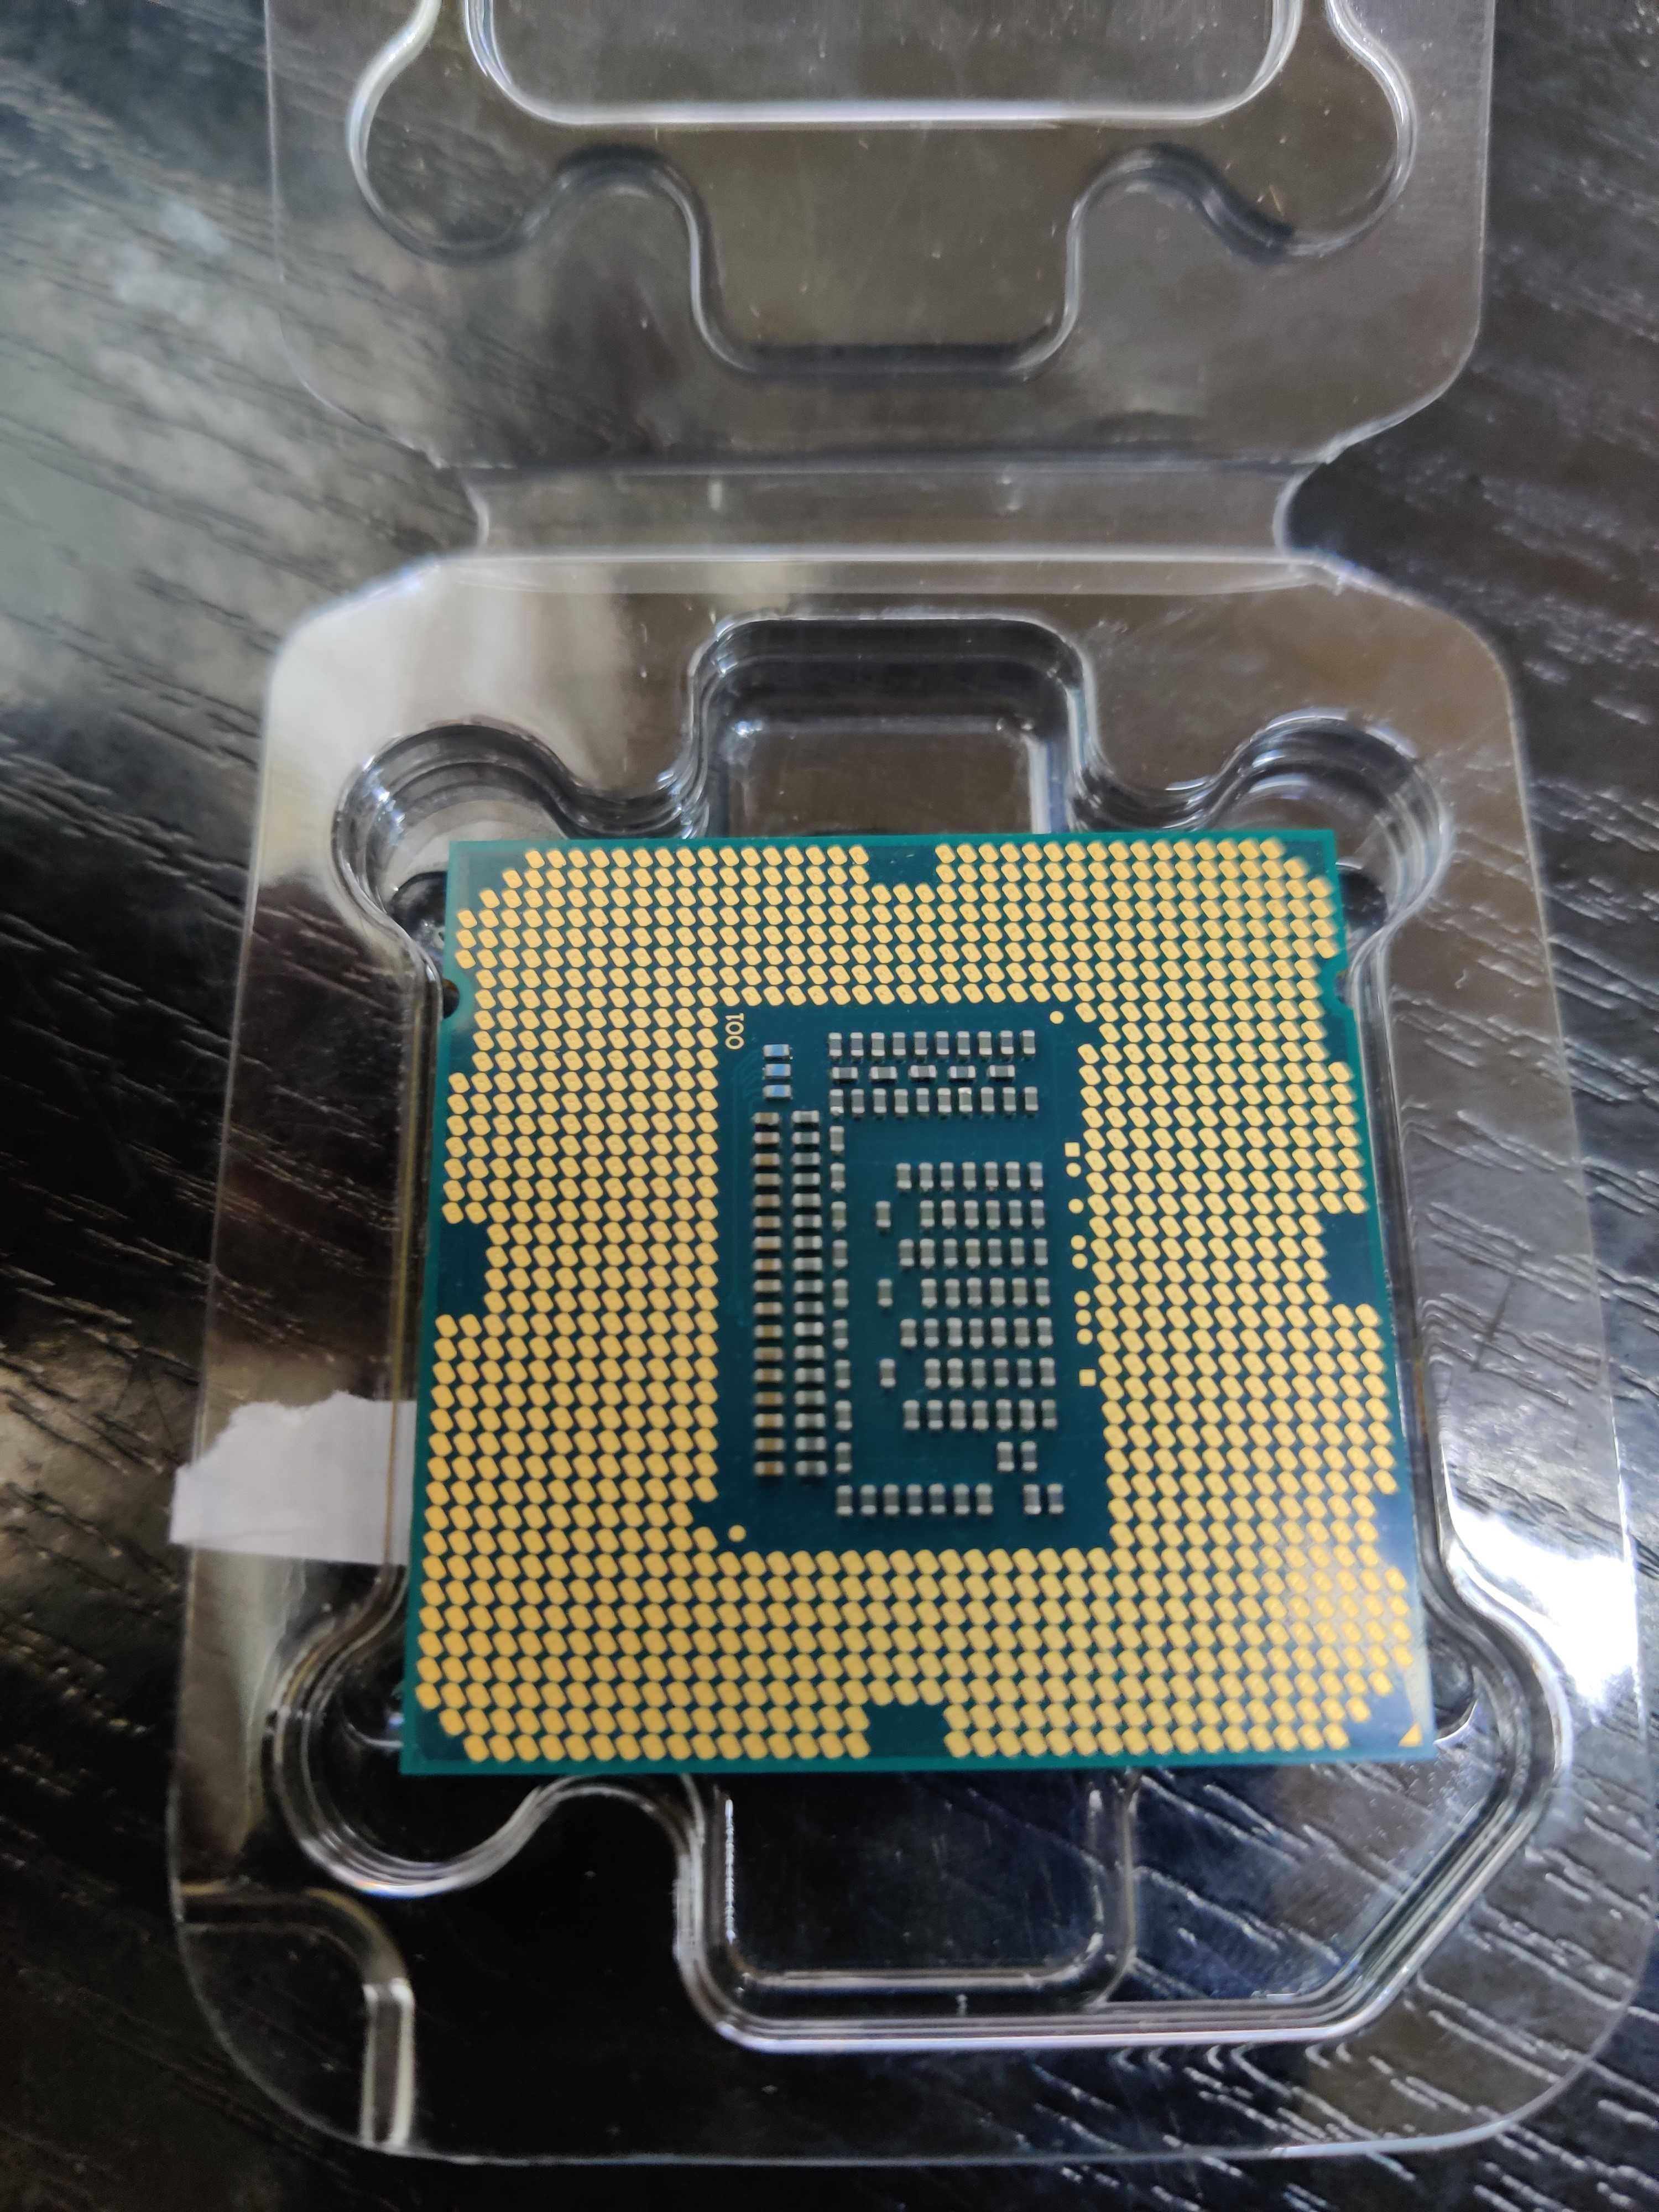 Intel Xeon E3-1230 v2 3.3-3.7GHz/8MB (i7-3770) 1155 сокет